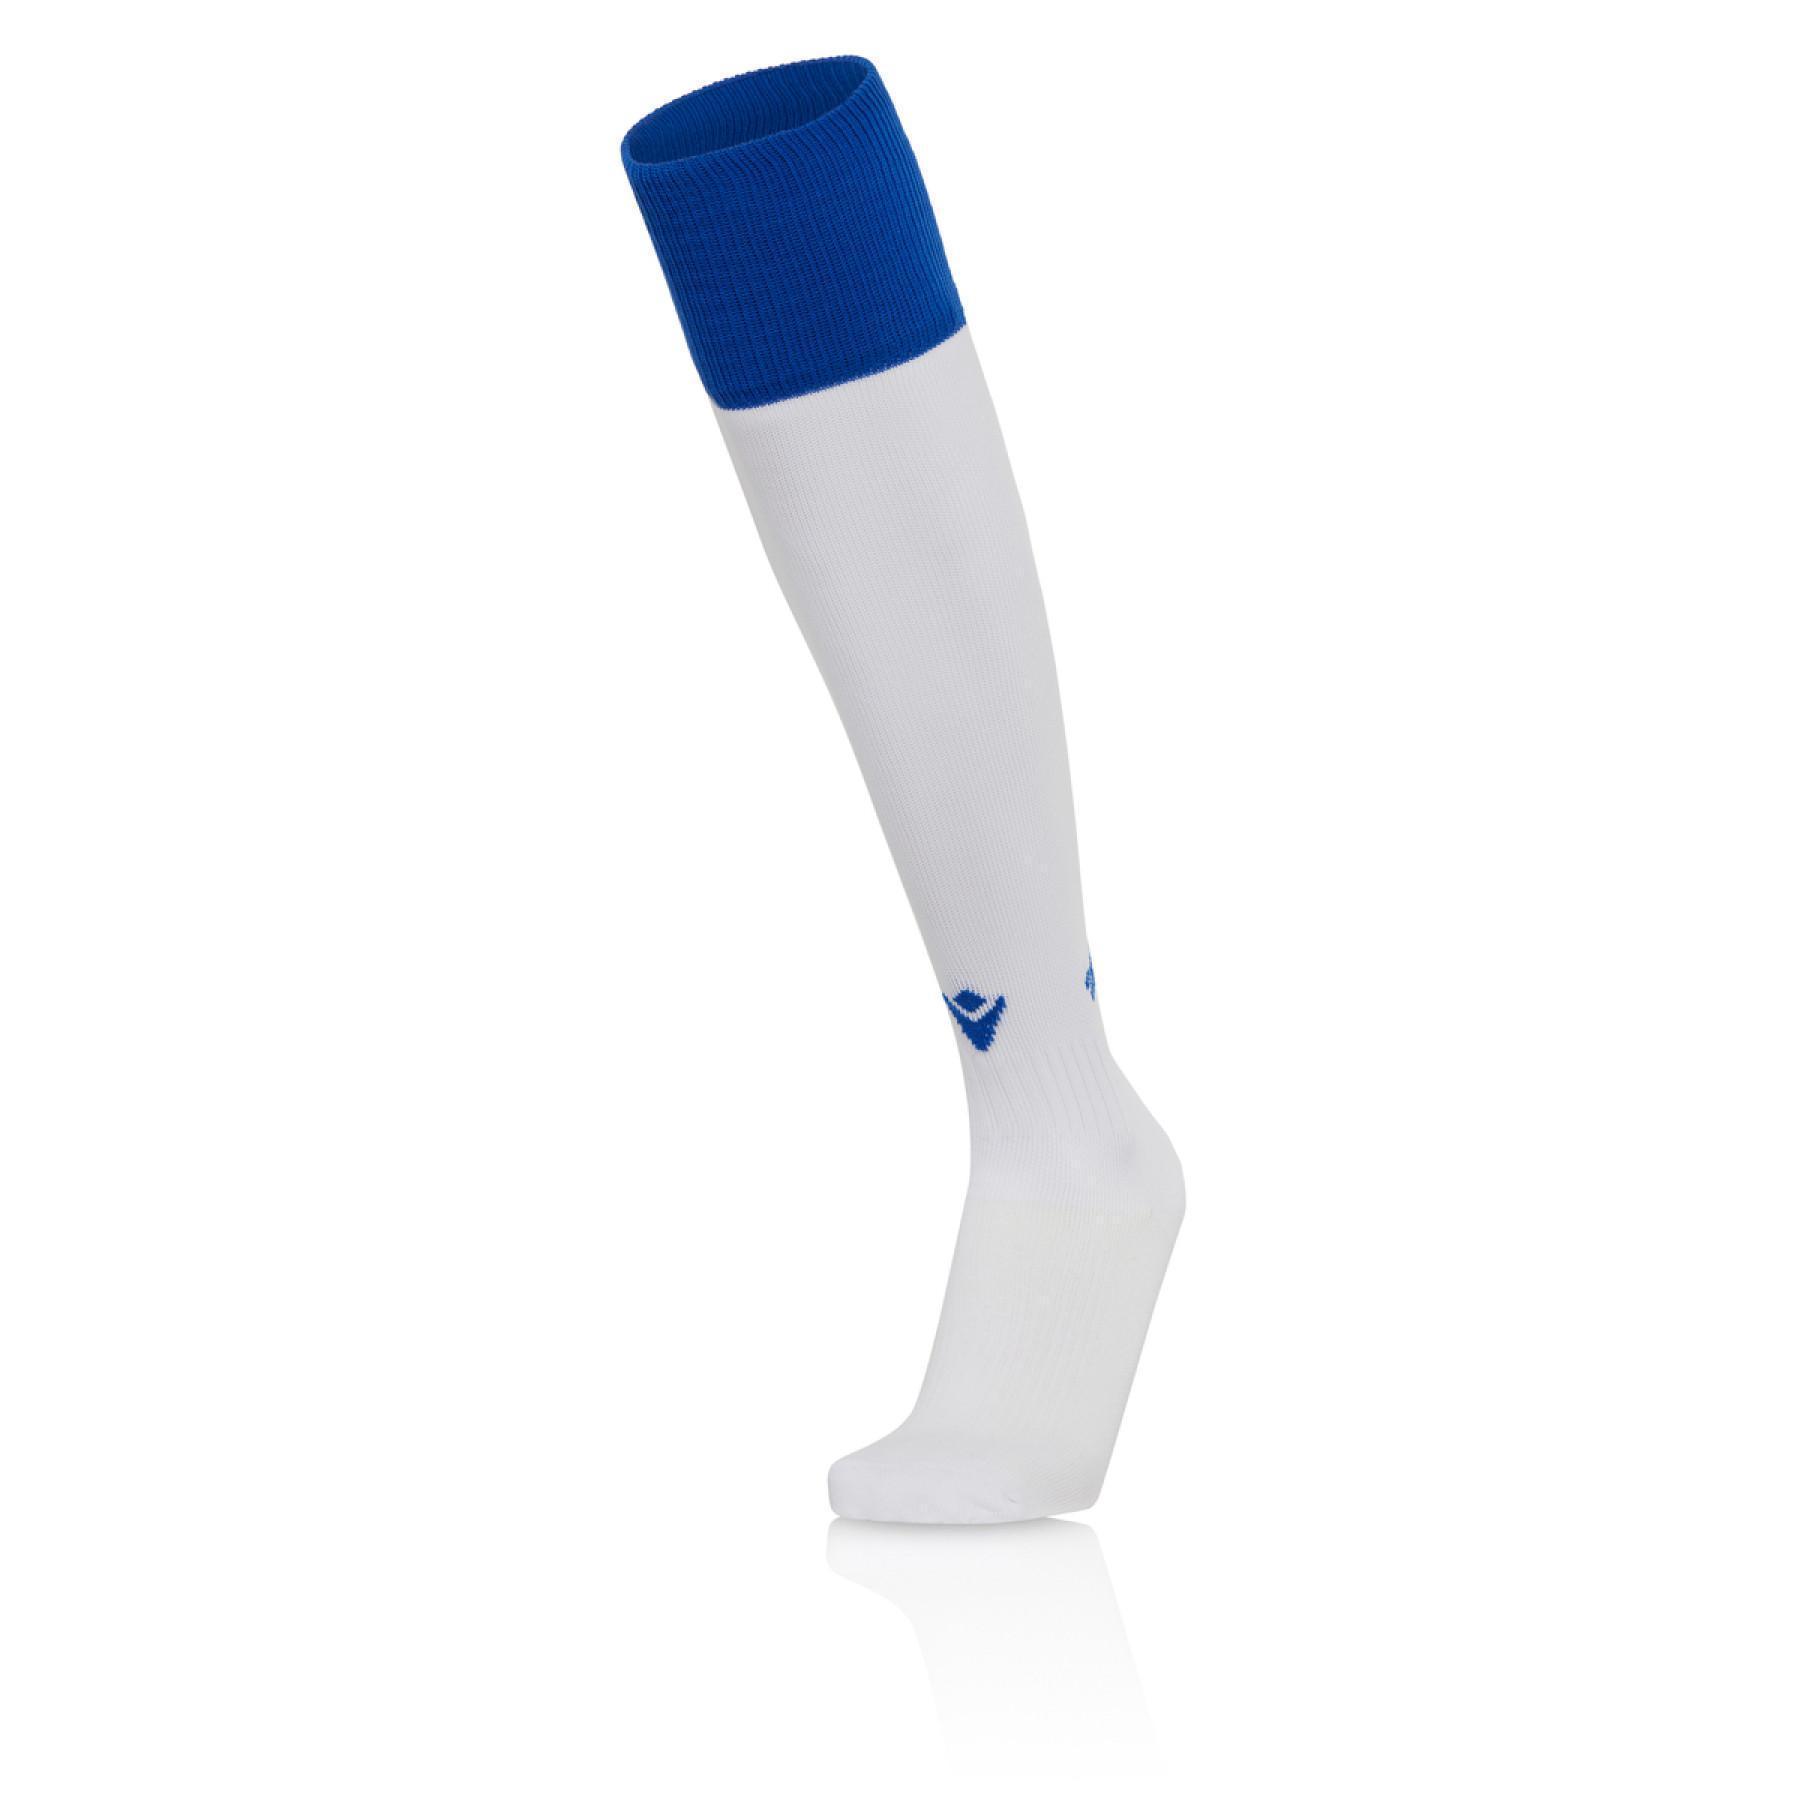 Home socks uc sampdoria 2020/21